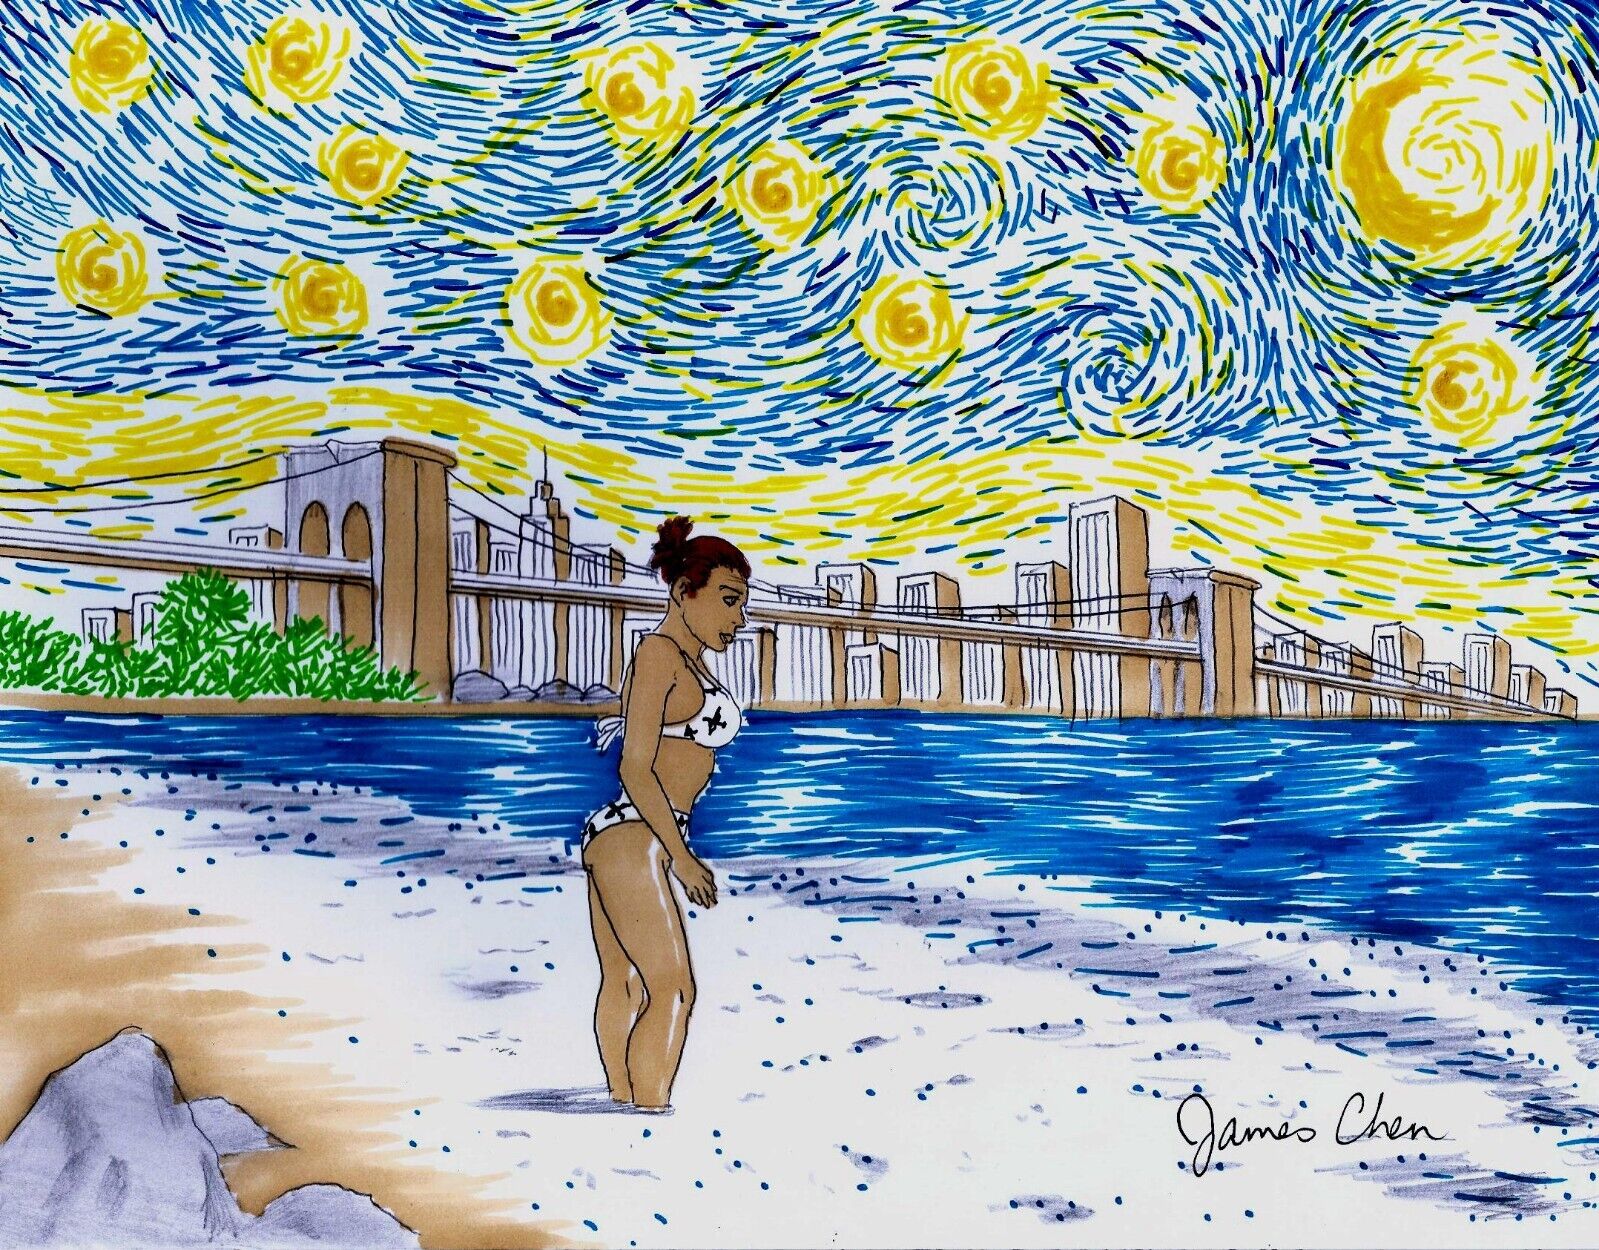 ANA ON THE BEACH ON A STARRY NIGHT IMPRESSIONIST FINE ART BY COMIC ARTIST J CHEN